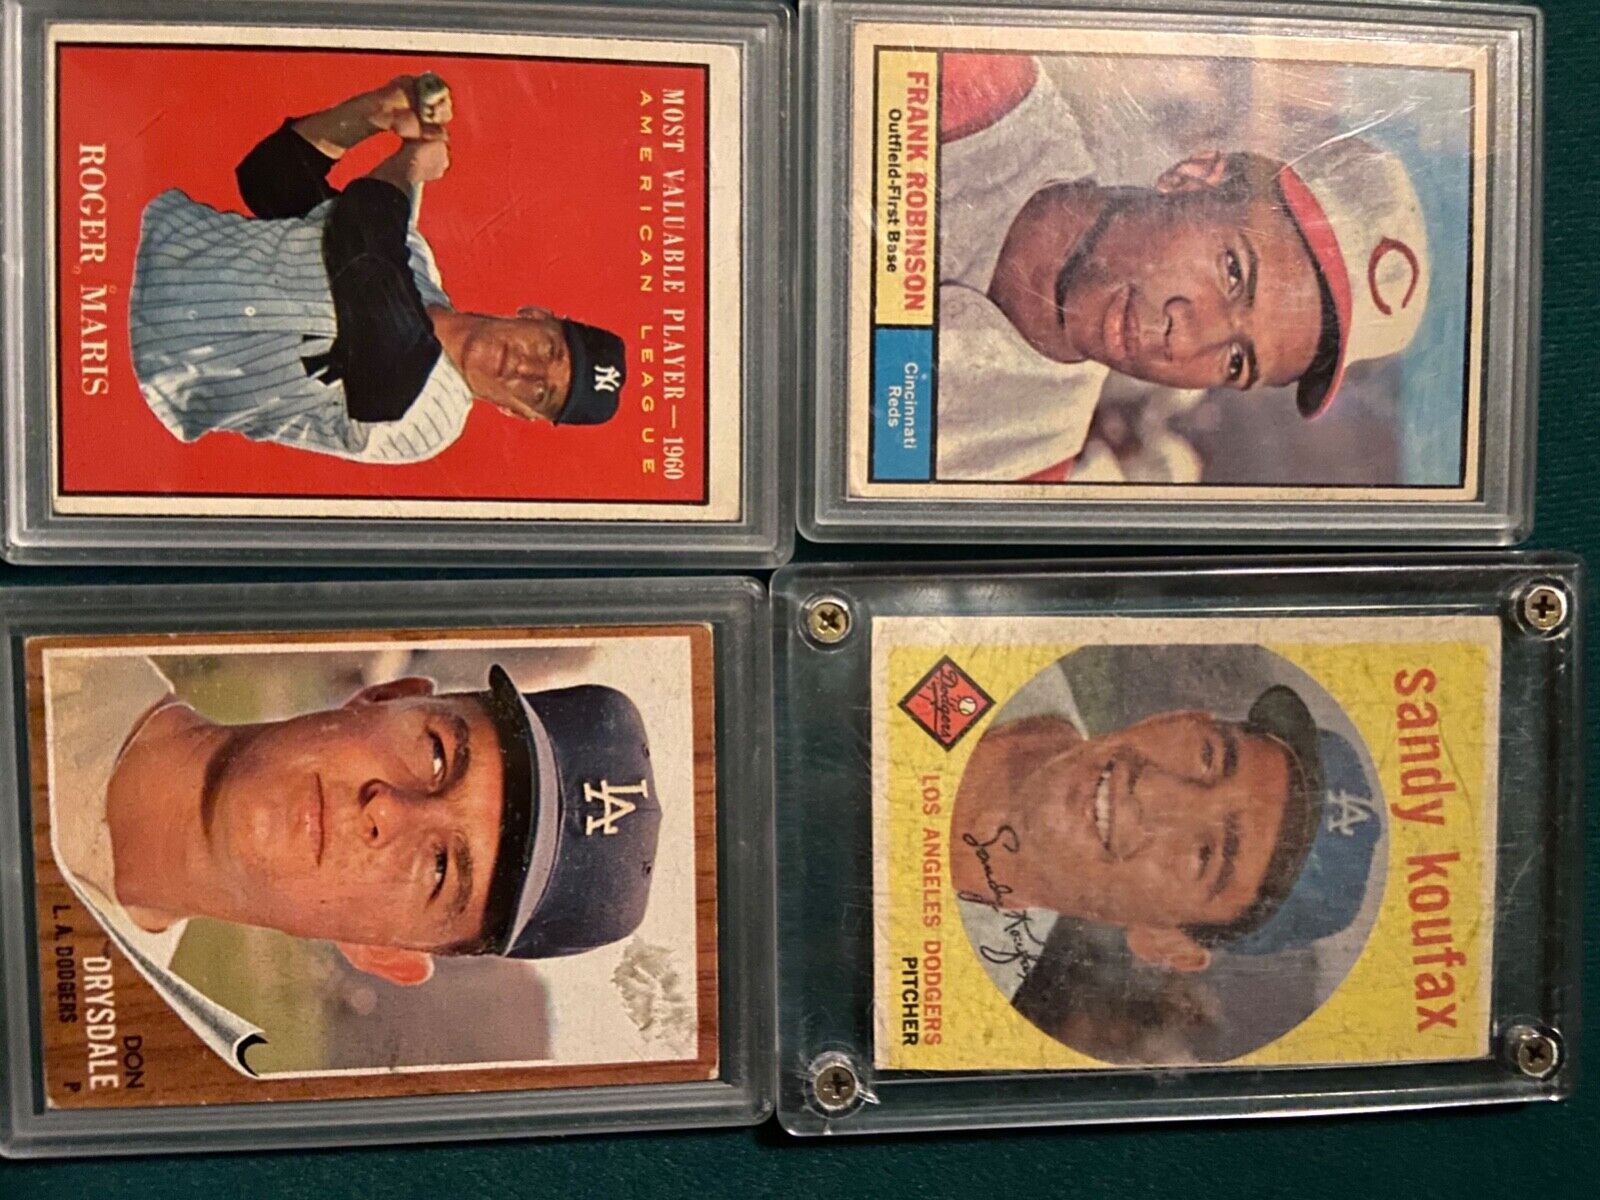 4 Vintage cards. 60 Maris, 61Drysdale, 59 Kofax, 61 Frank Robinson. 